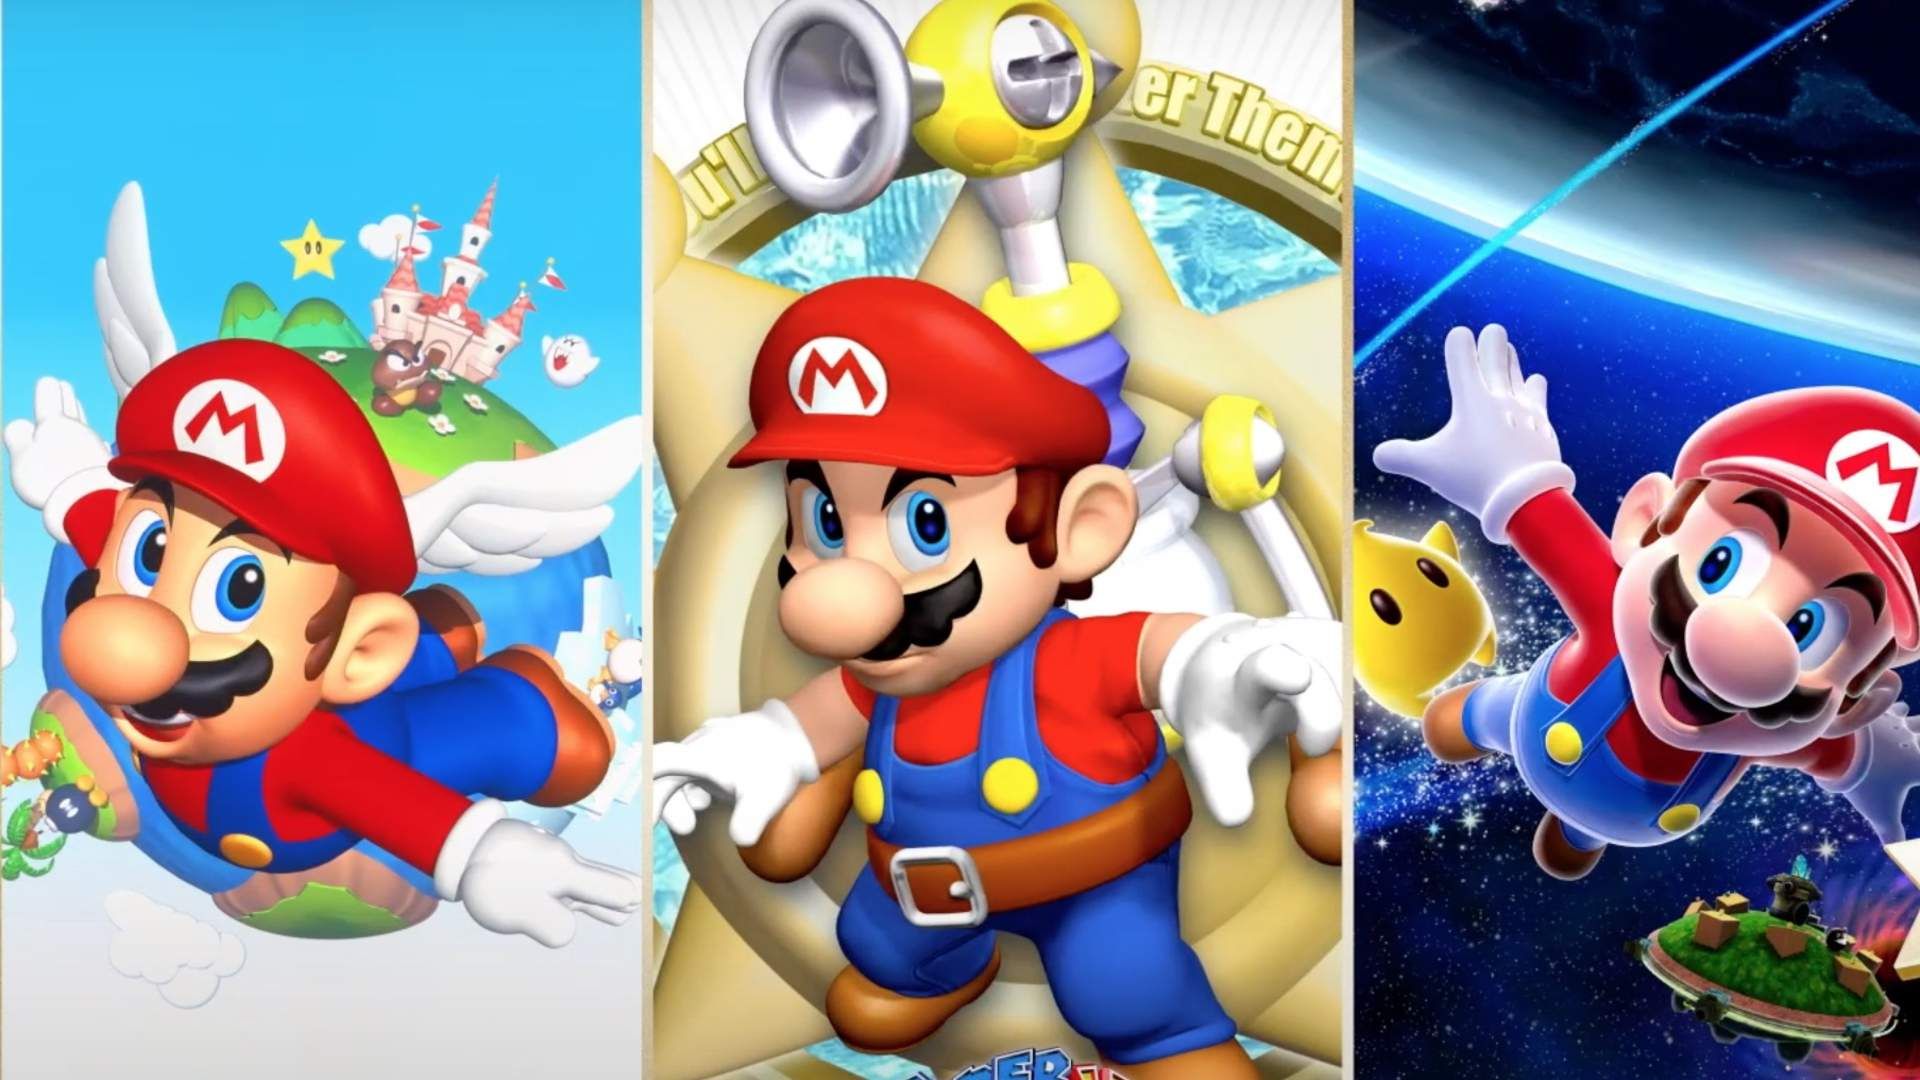 Super Mario 3D All-Stars Logo